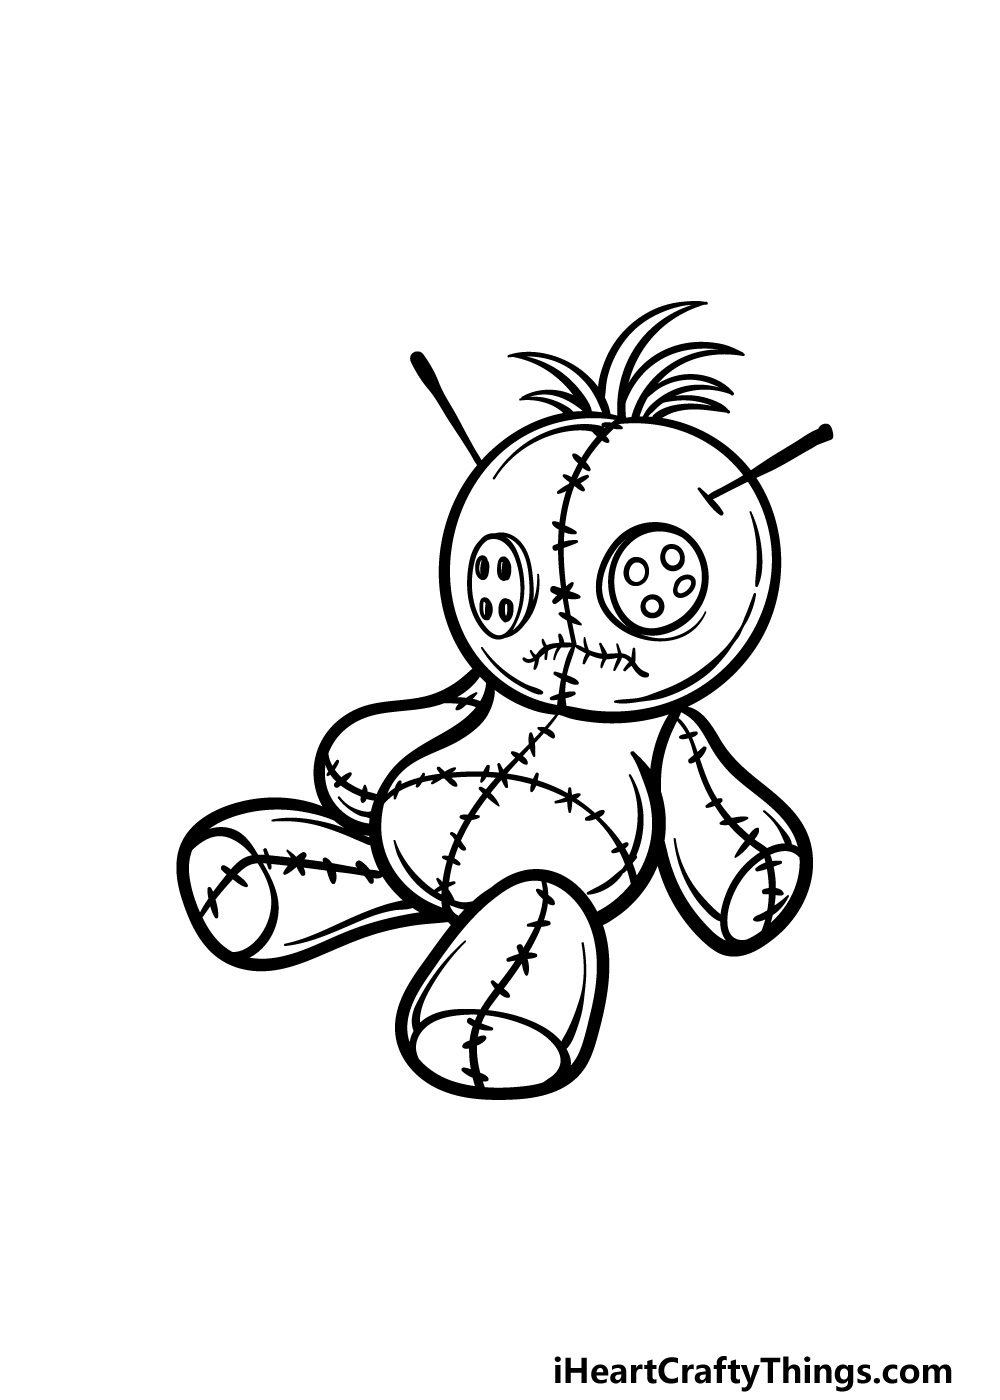 Doll Sketch PNG Transparent Images Free Download | Vector Files | Pngtree